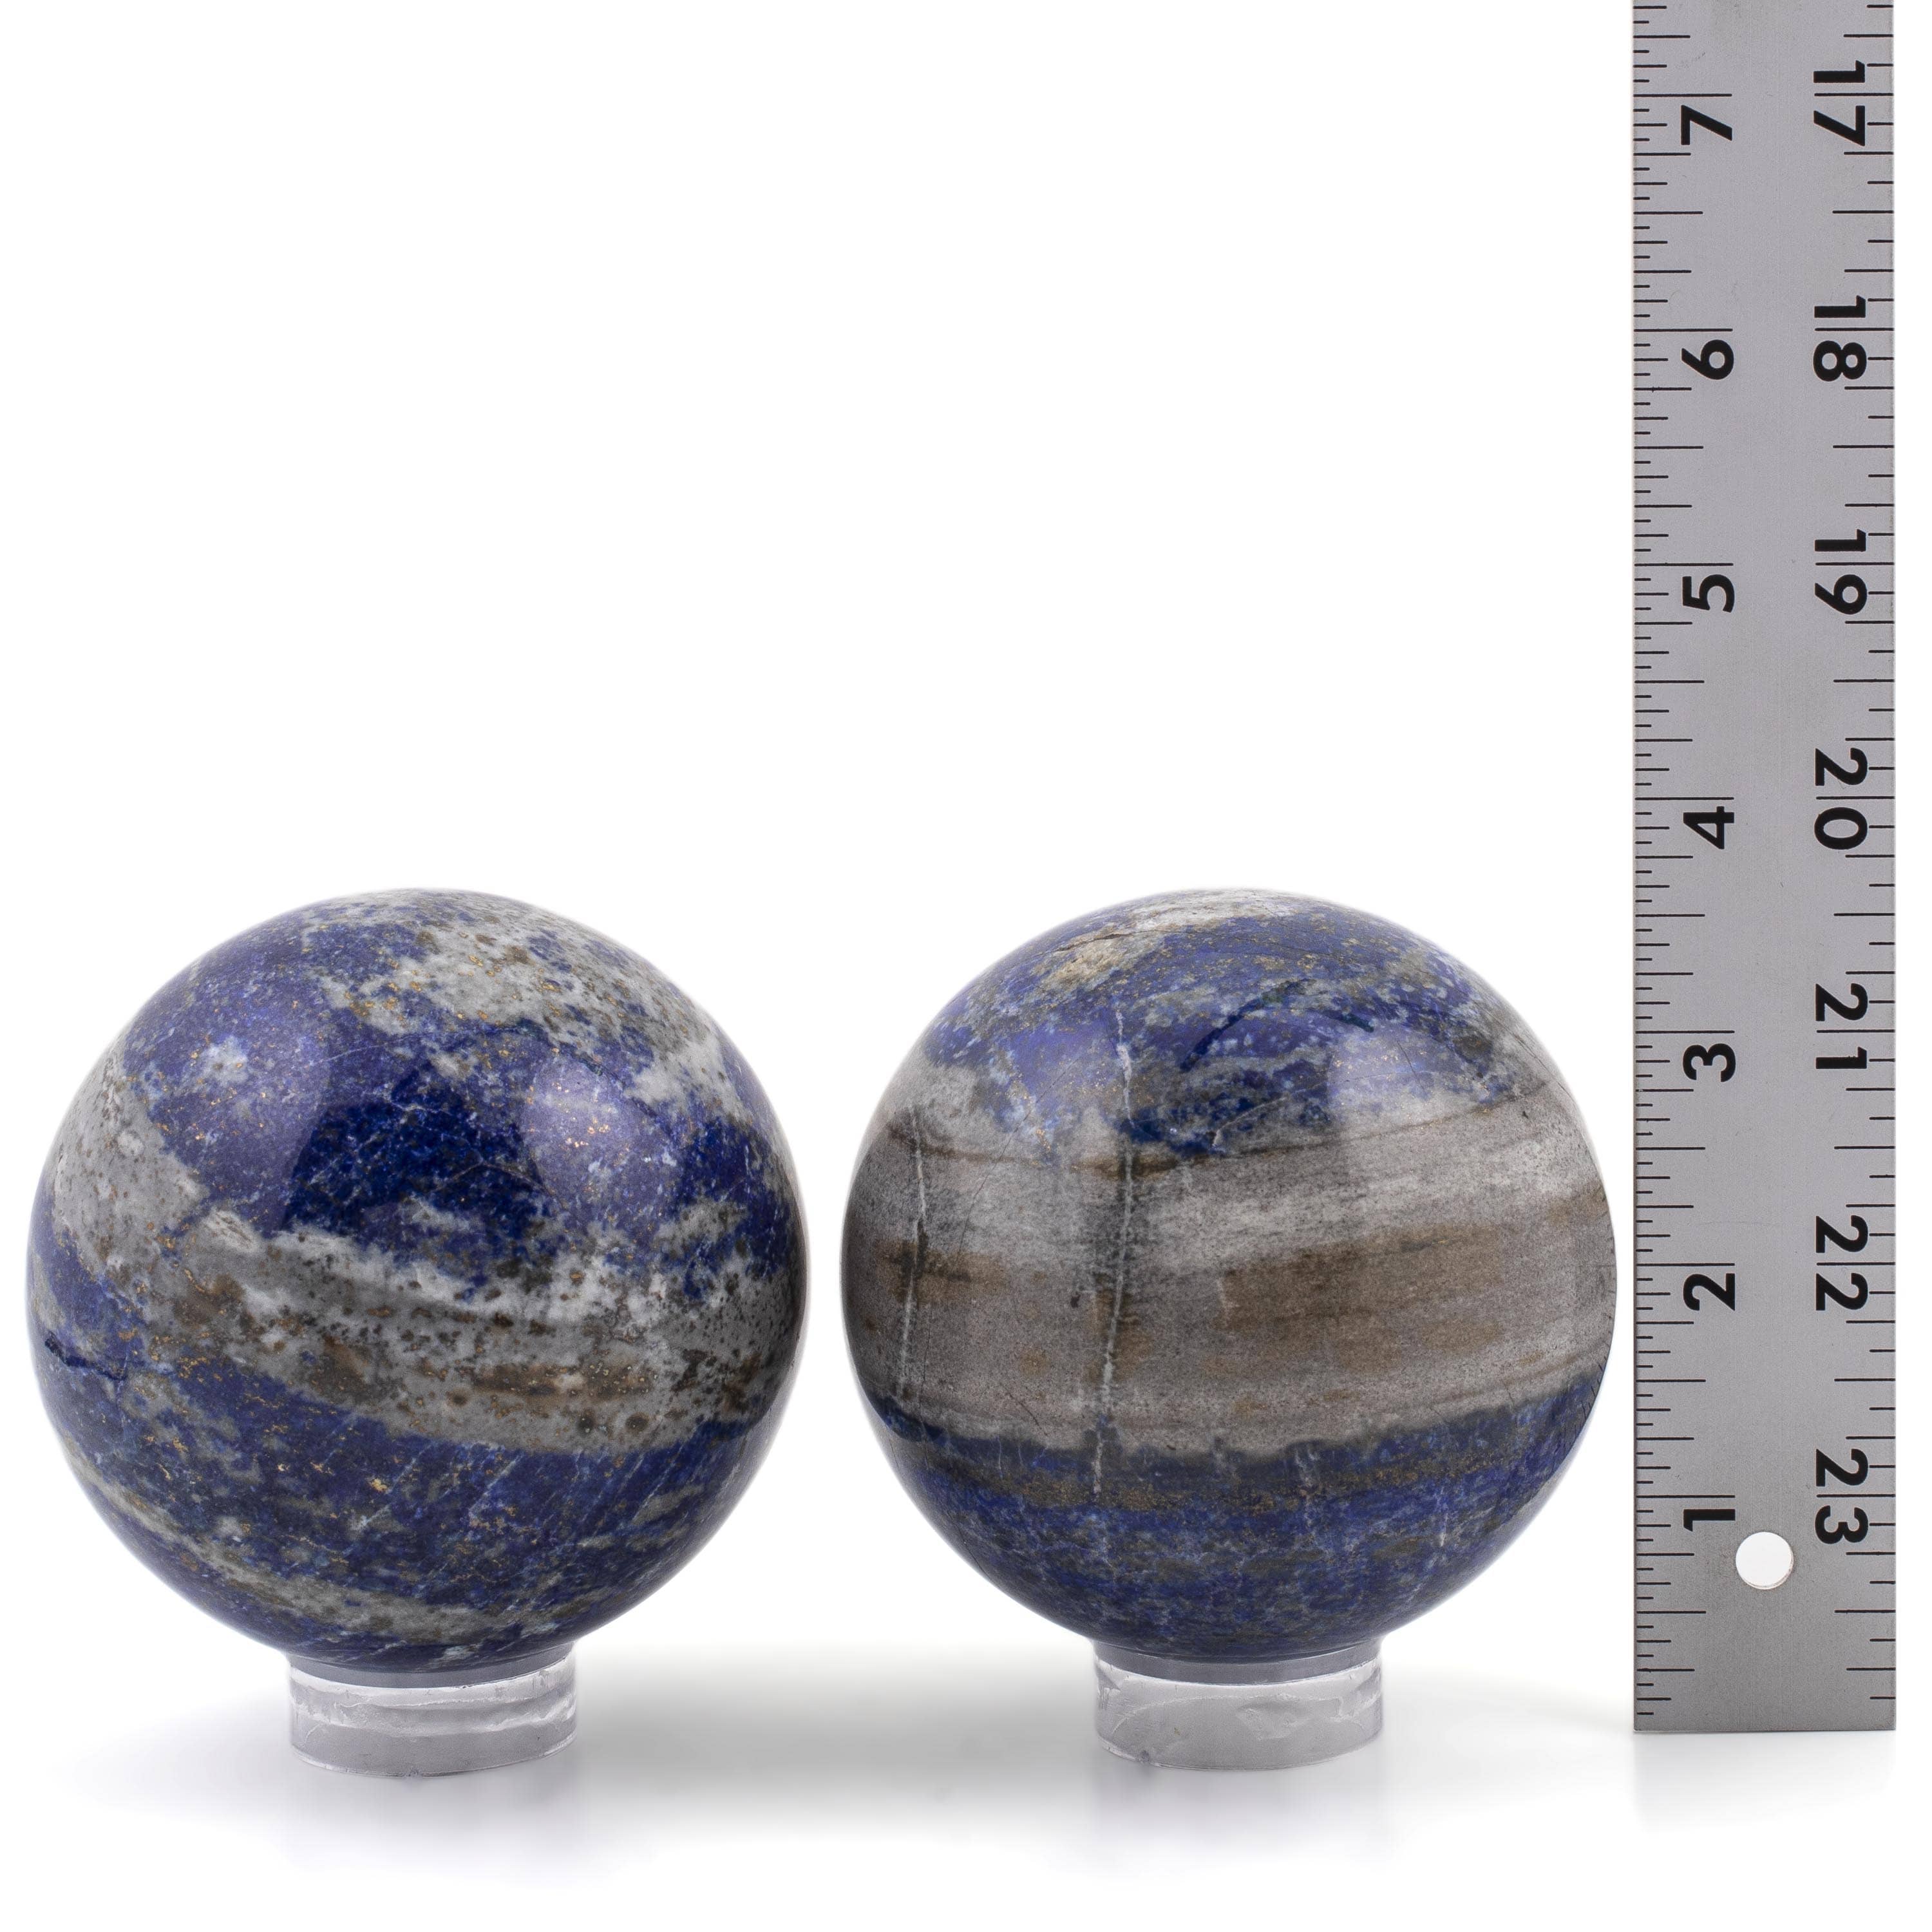 Kalifano Lapis Lapis Lazuli Sphere Carving 3.25 in. / 950 grams LPS1100